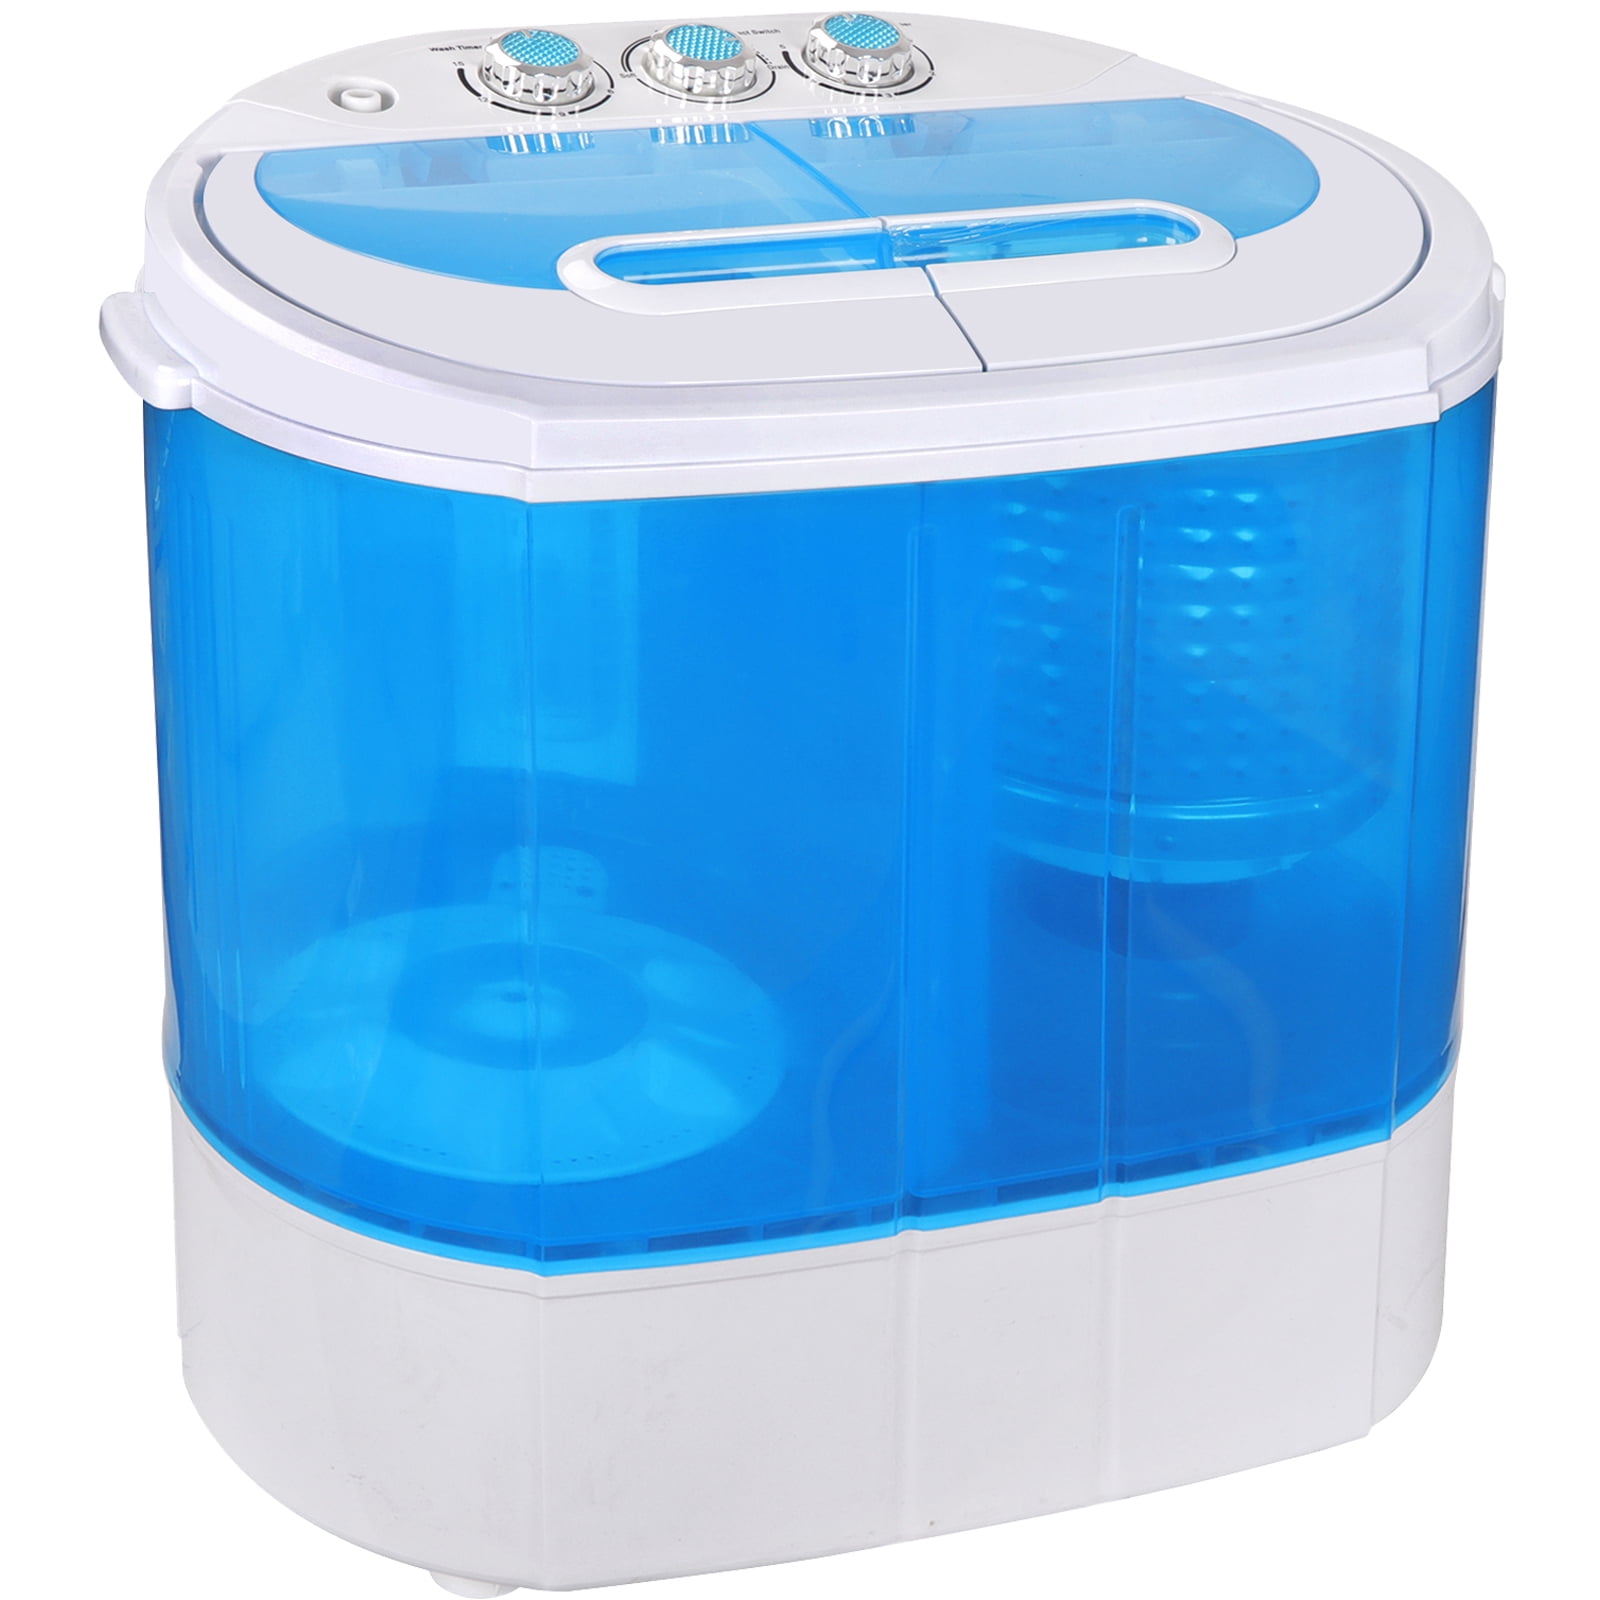 Yozumd 8L Portable Washing Machine,Folding Mini Washer Machine with Blue Light Drain Basket,3 Levels Timing Vibration Wave Foldable Laundry Bucket